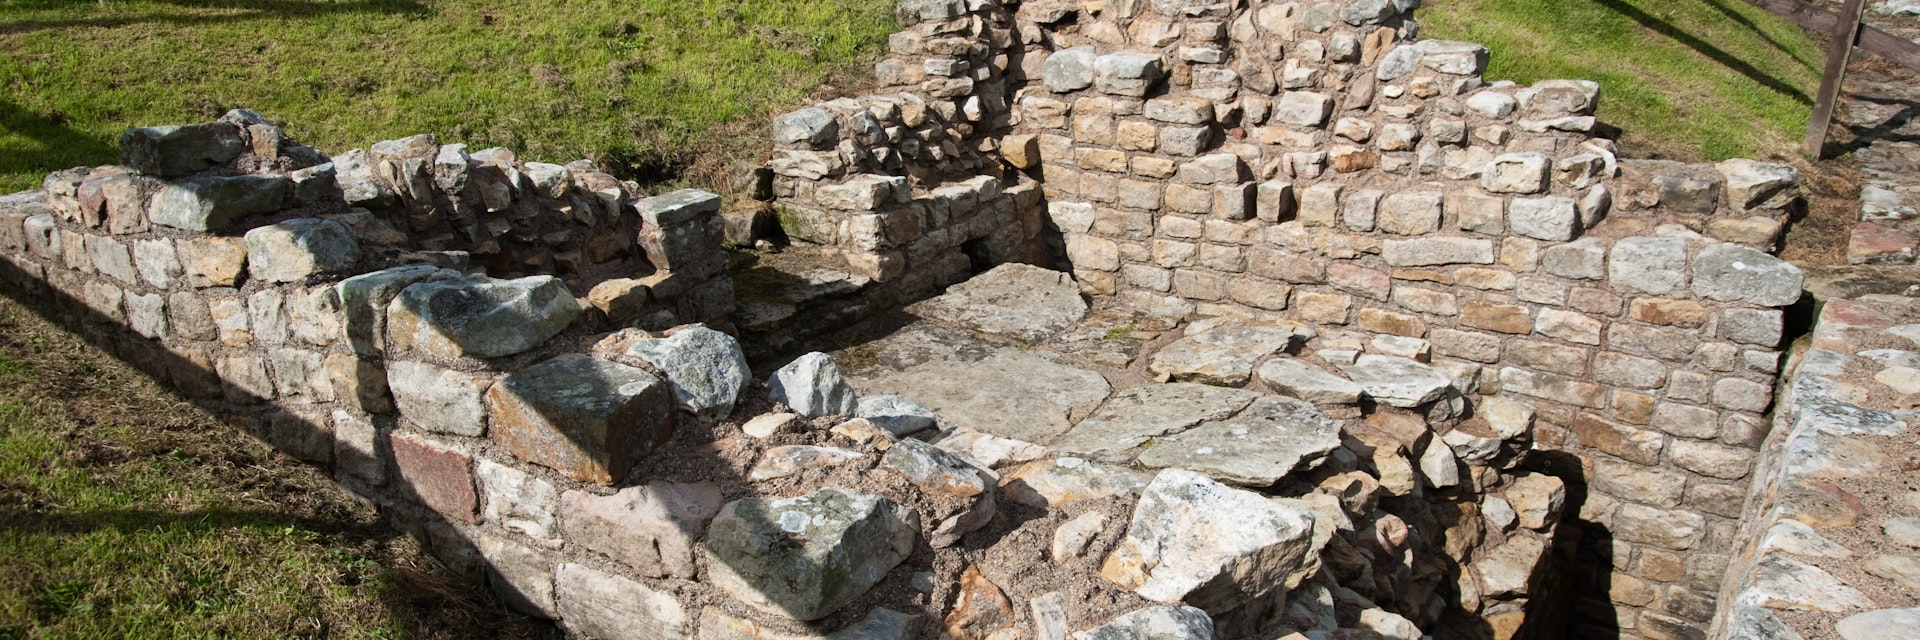 Ruins at Vindolanda Roman fort in England
45664927
archaeology, archeology, architecture, chesterholm, england, field, fort, hadrian, kingdom, roman, ruin, stanegate, stone, uk, united, vindolanda, wall